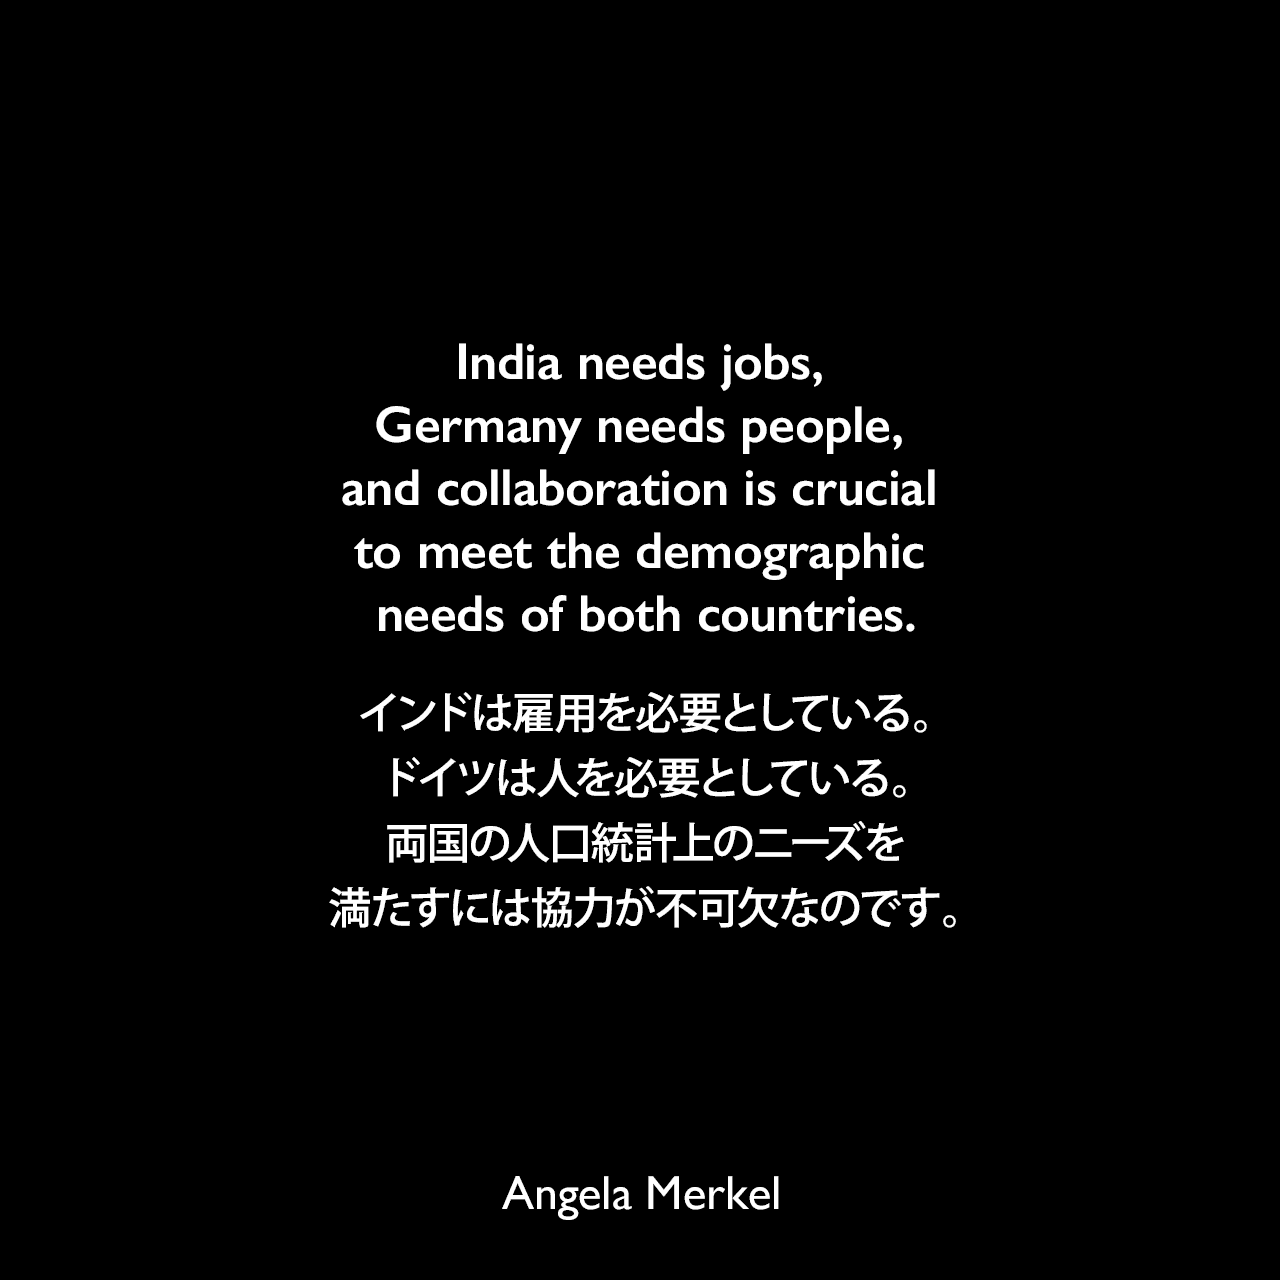 India needs jobs, Germany needs people, and collaboration is crucial to meet the demographic needs of both countries.インドは雇用を必要としている。ドイツは人を必要としている。両国の人口統計上のニーズを満たすには協力が不可欠なのです。Angela Merkel